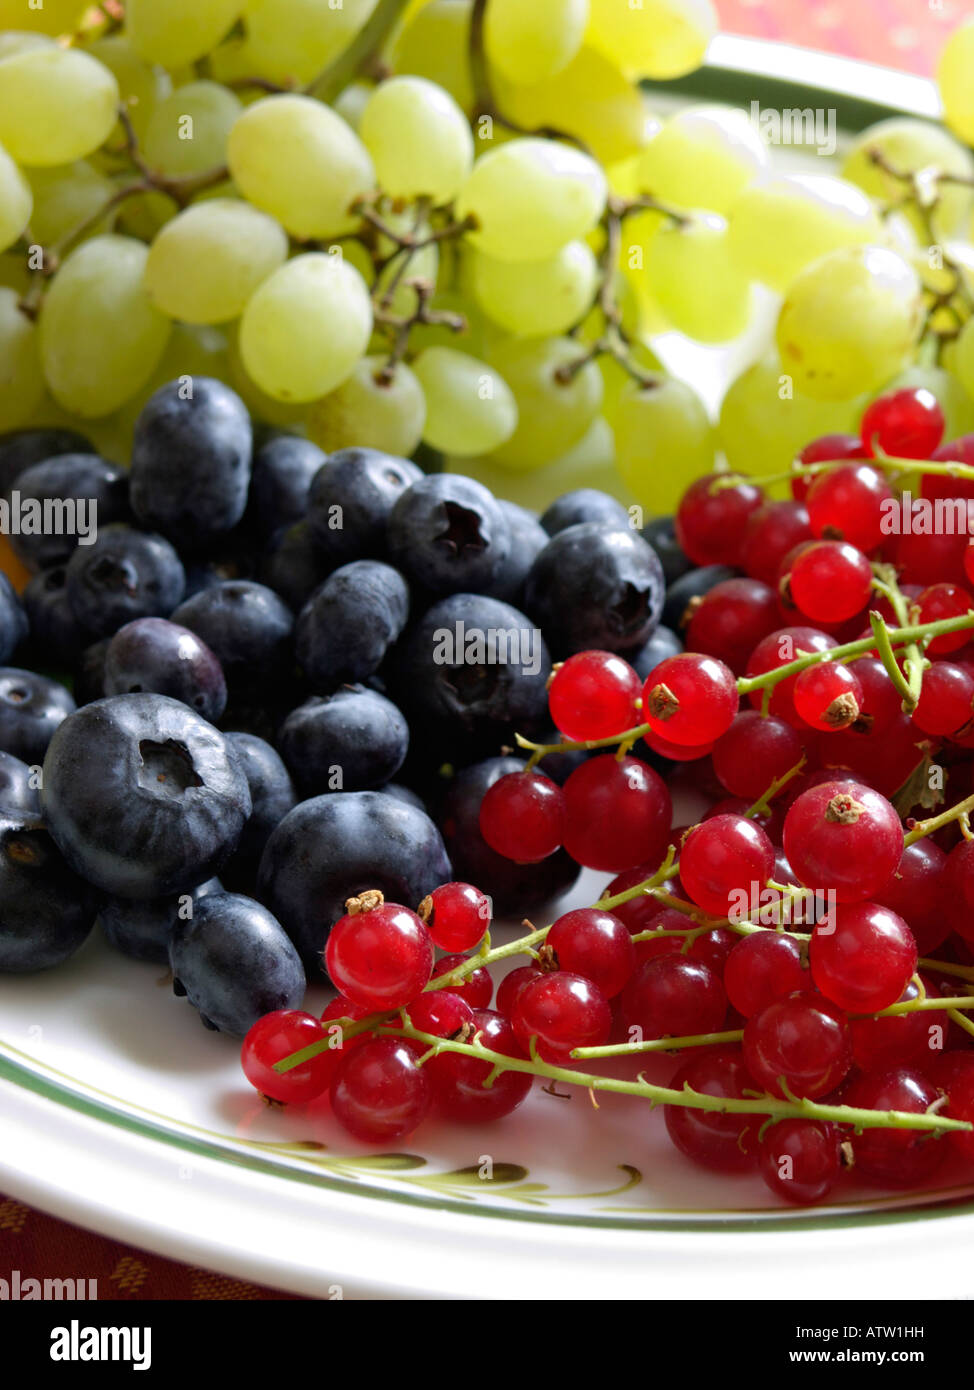 Blueberry (Vaccinium corymbosum), red currant (Ribes rubrum) and grape vine (Vitis vinifera) Stock Photo